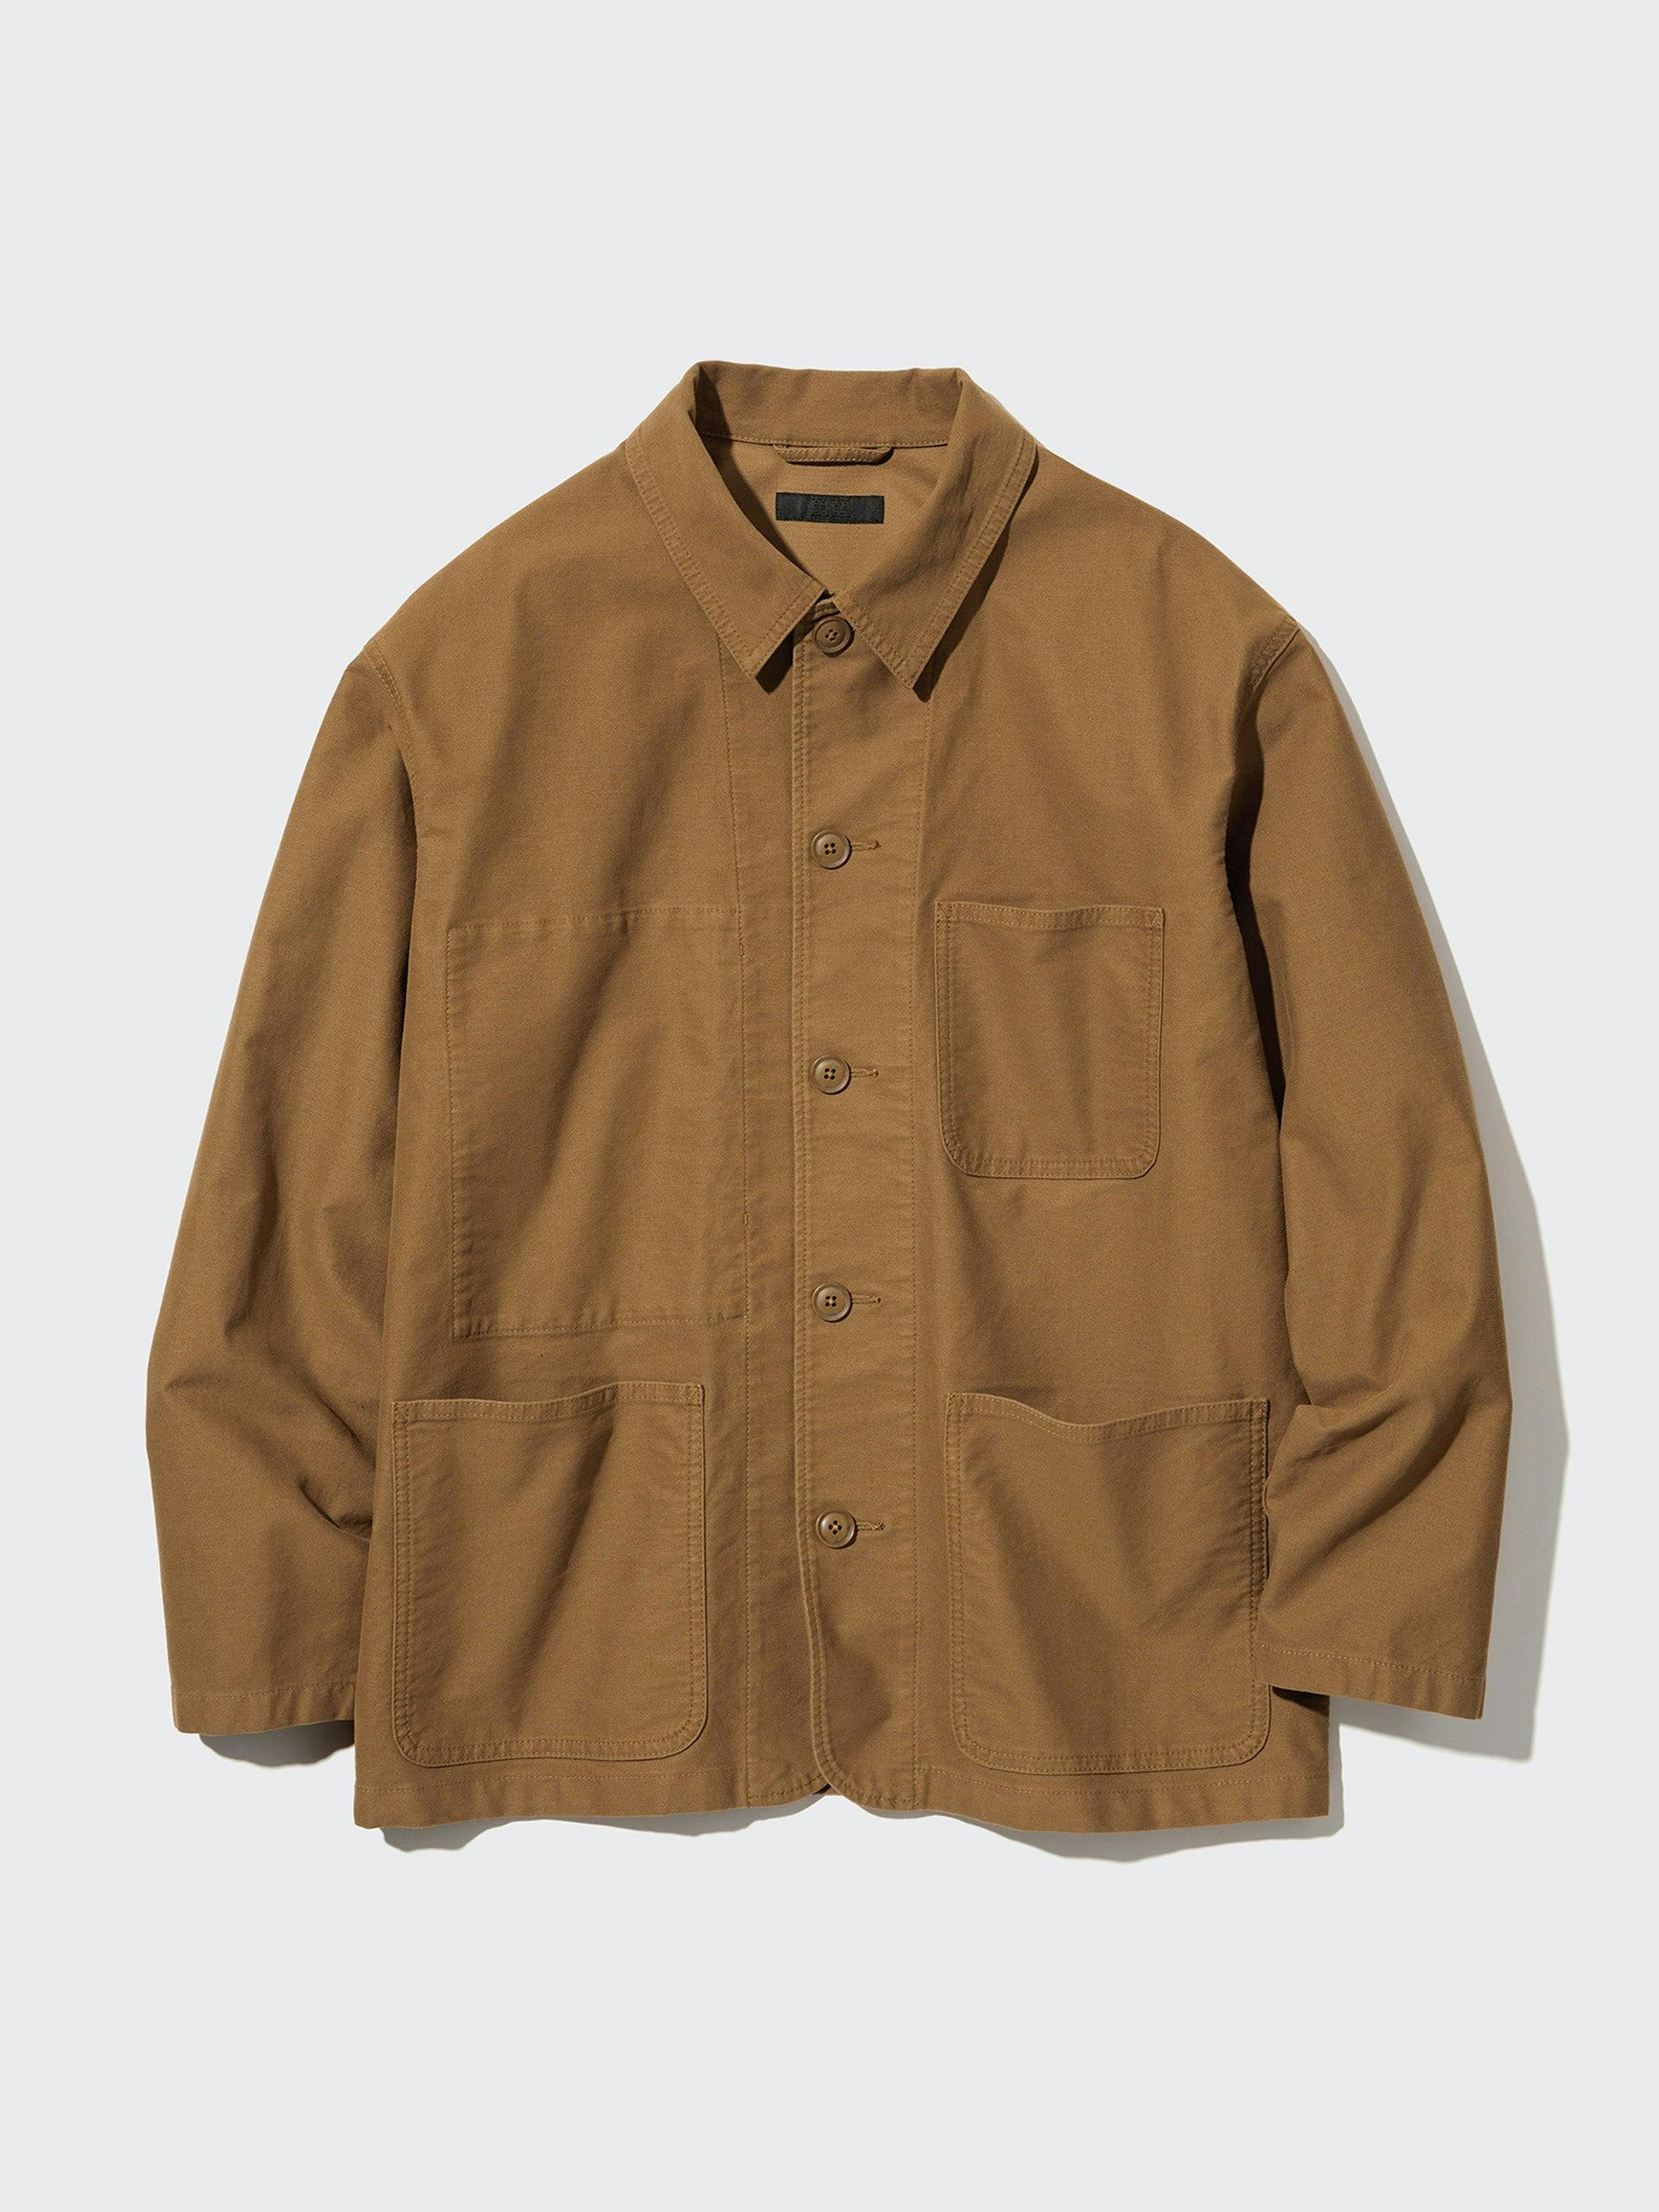 Utility jacket in brown